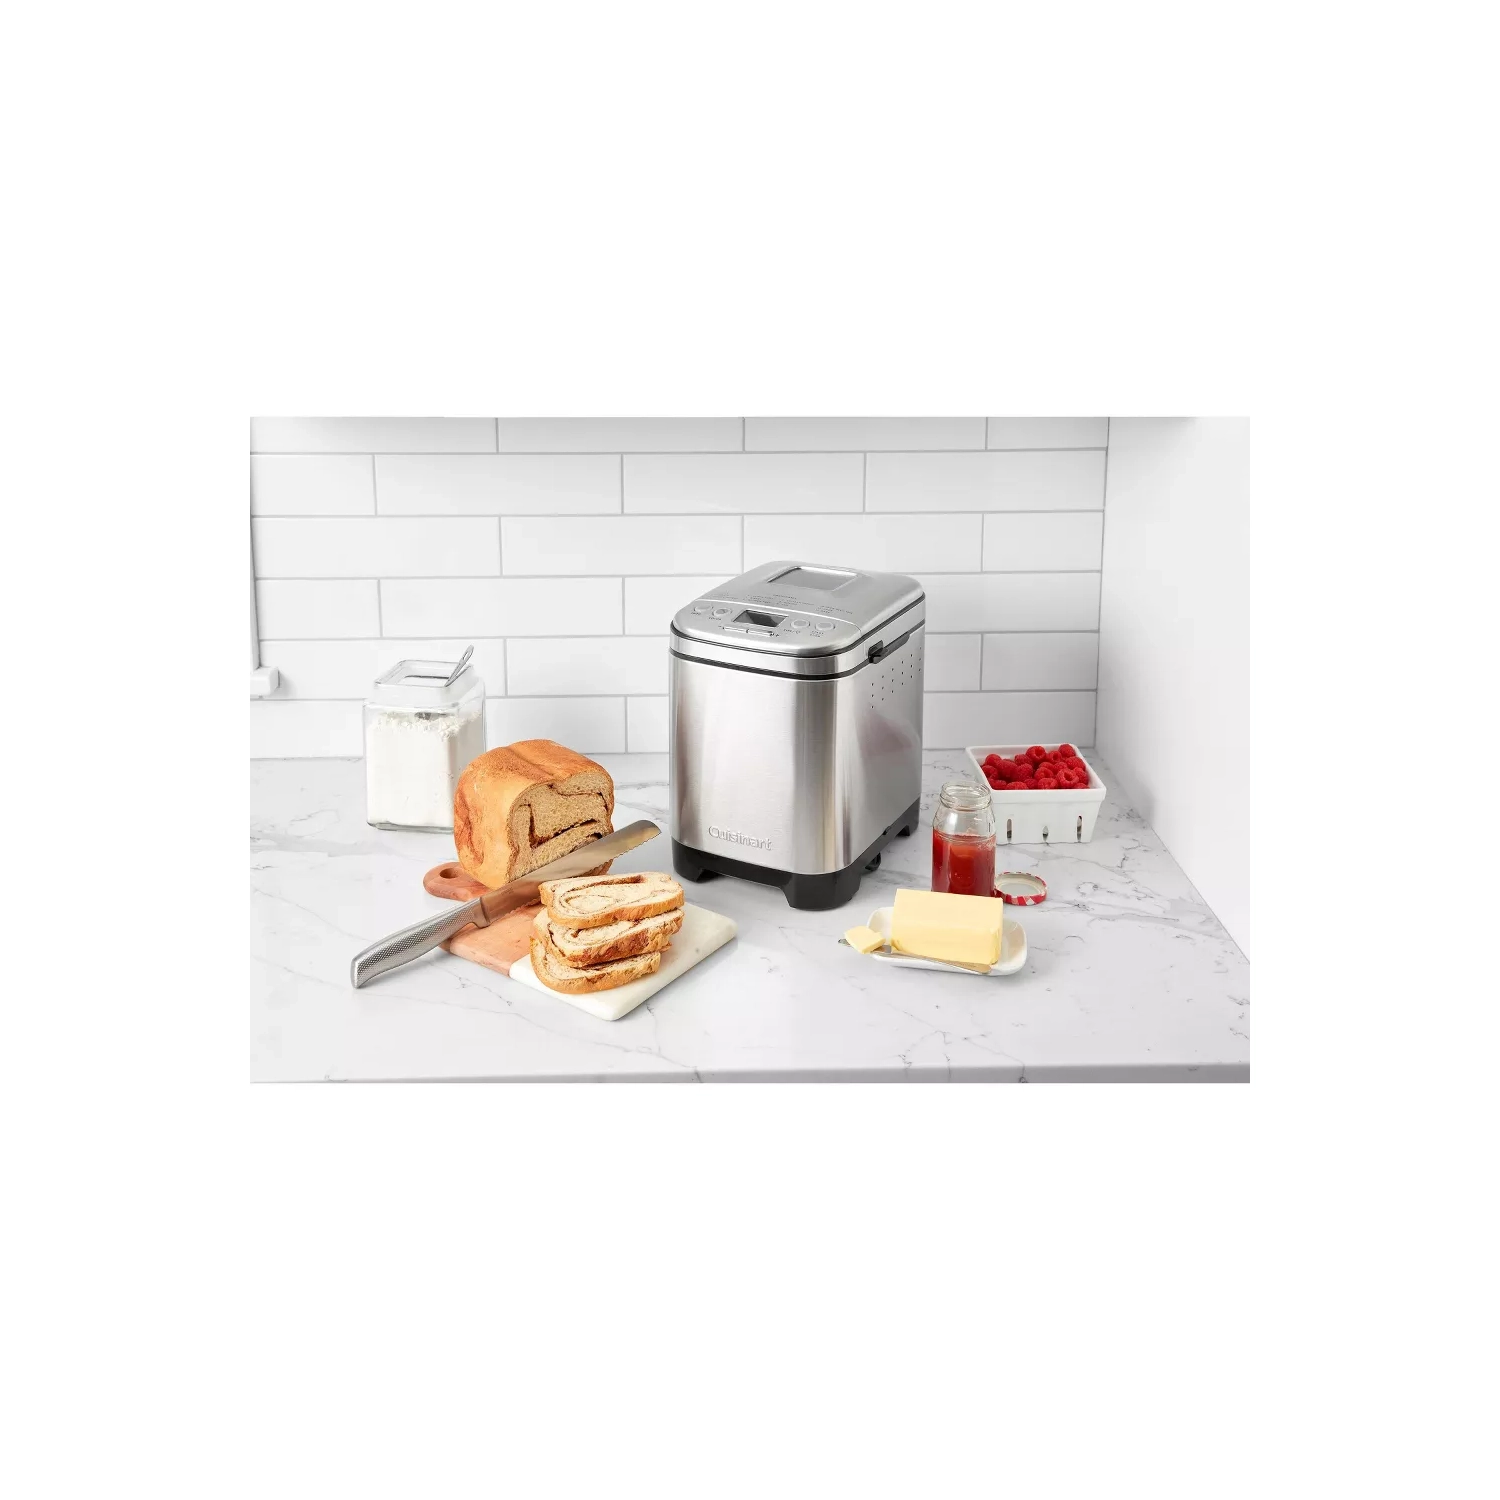 Cuisinart Compact 2lb Bread Maker - Stainless Steel - Cbk-110p1